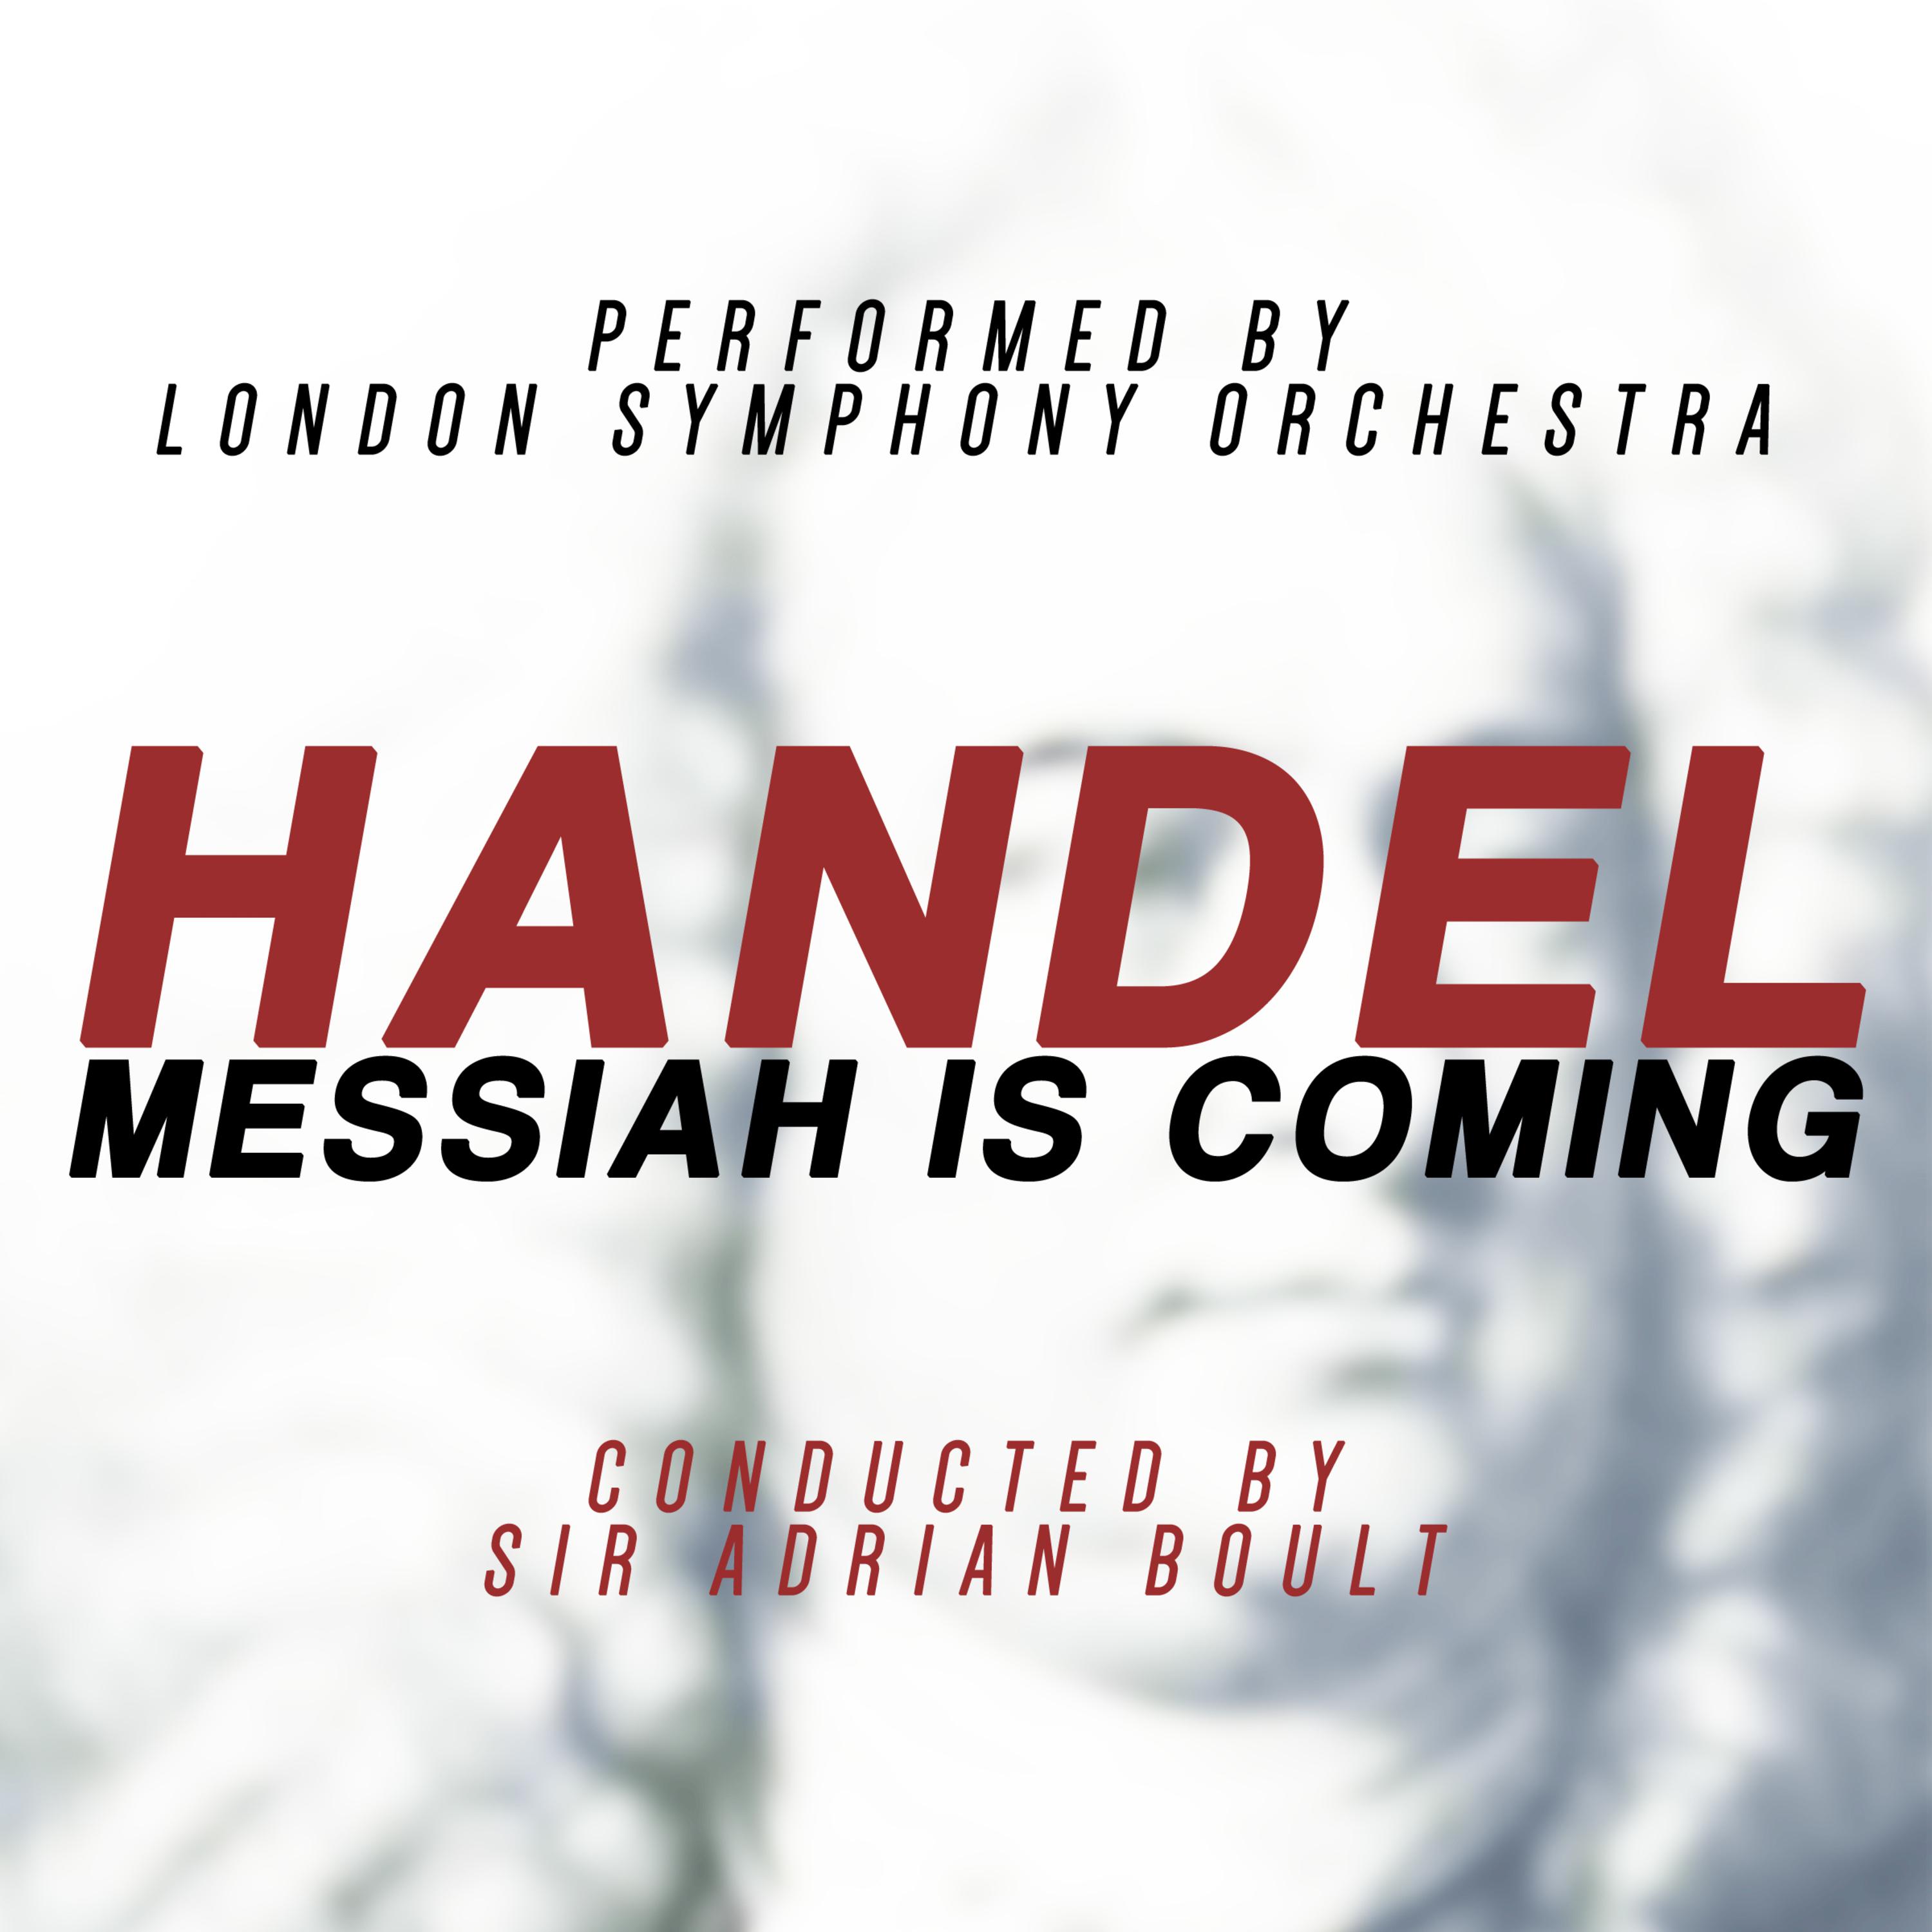 Handel: Messiah Is Coming